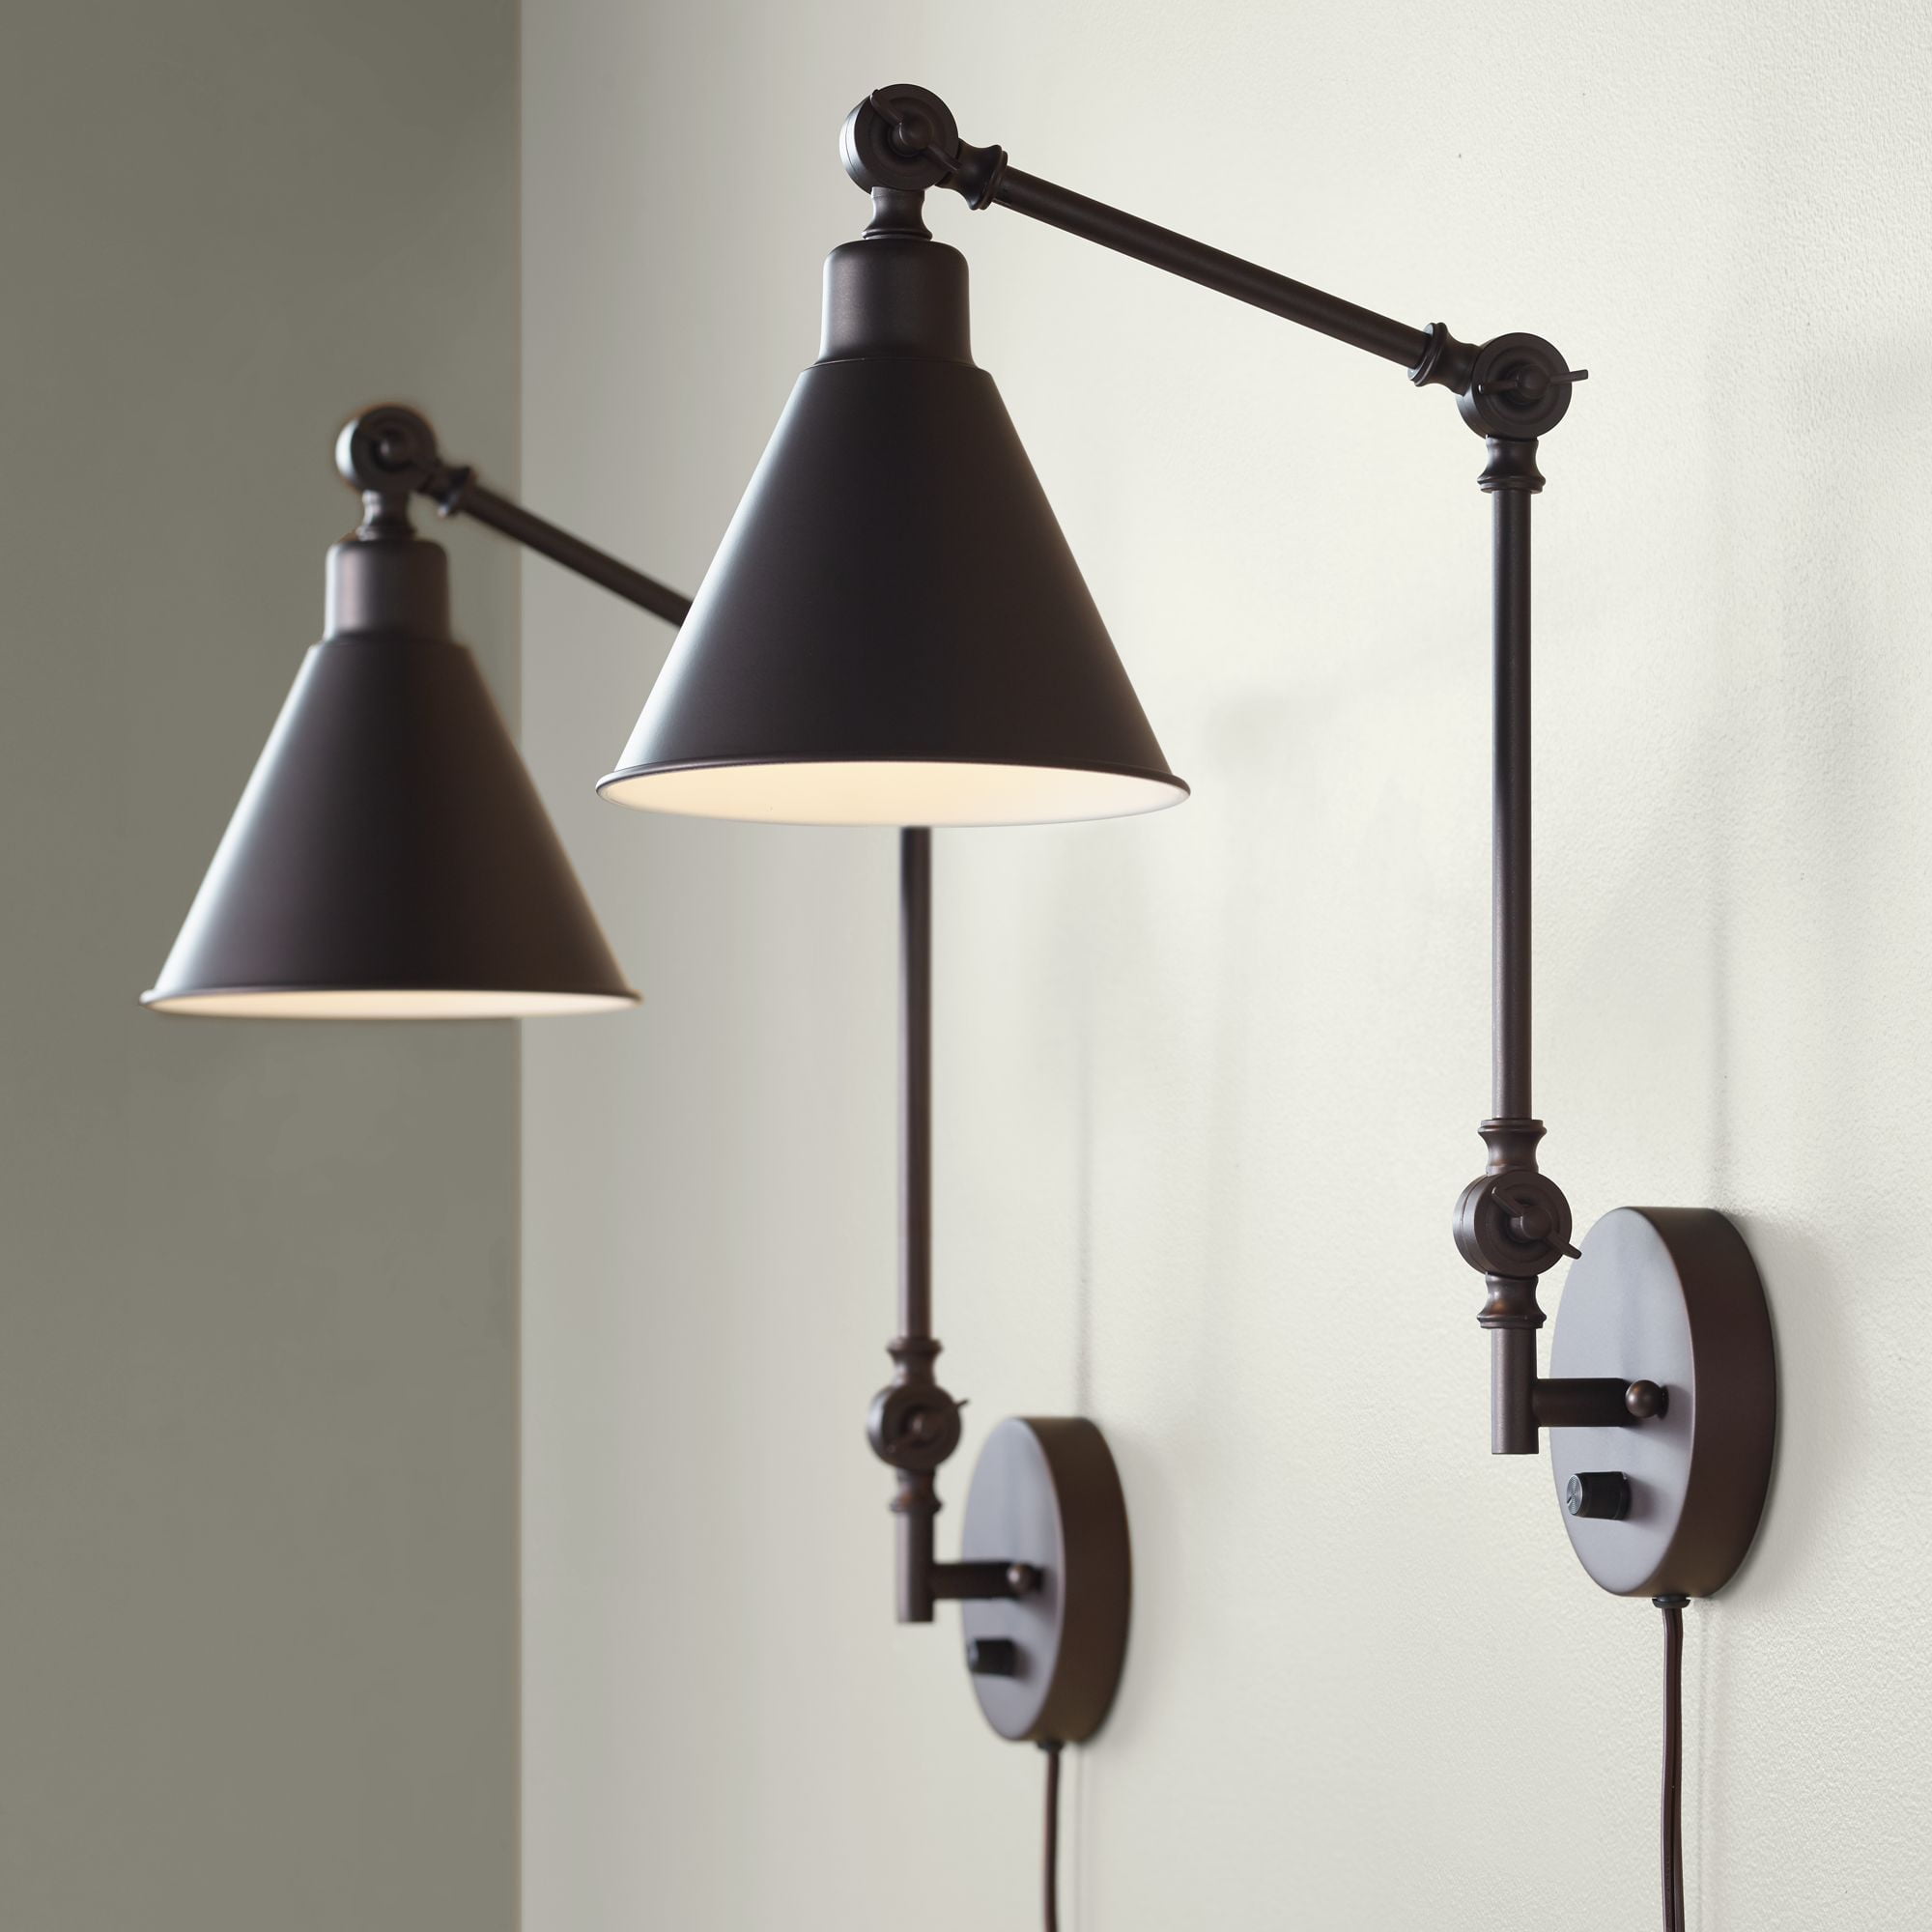 Industrial Retro Loft Adjustable Wall Sconce LED Wall Lamp living room light 